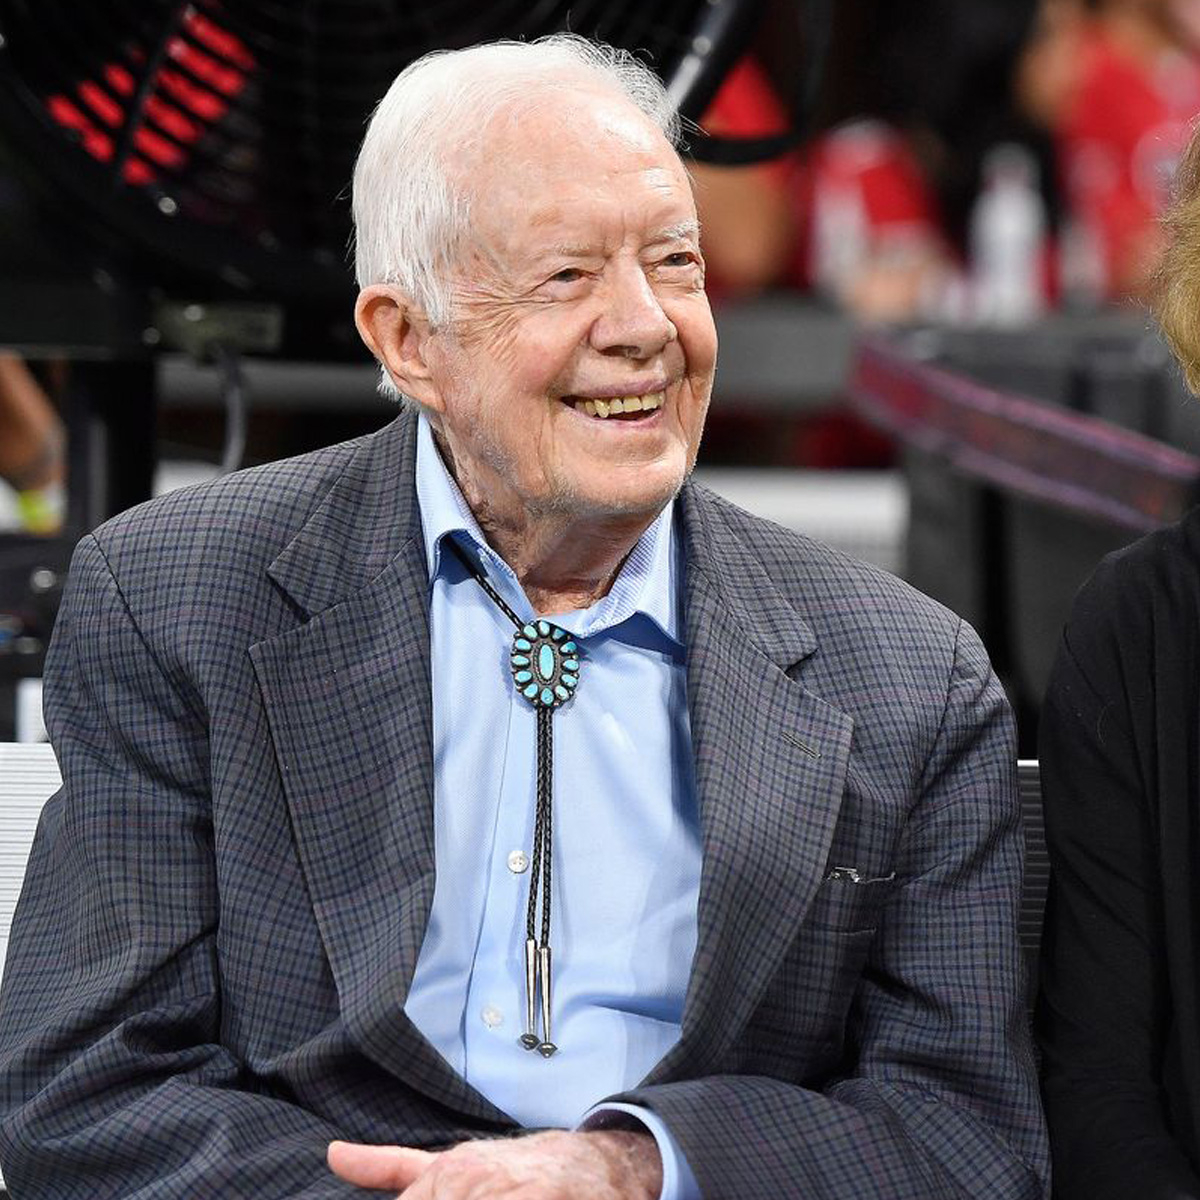 Jimmy Carter’s Grandson Gives Update on “Really Sick” Former President